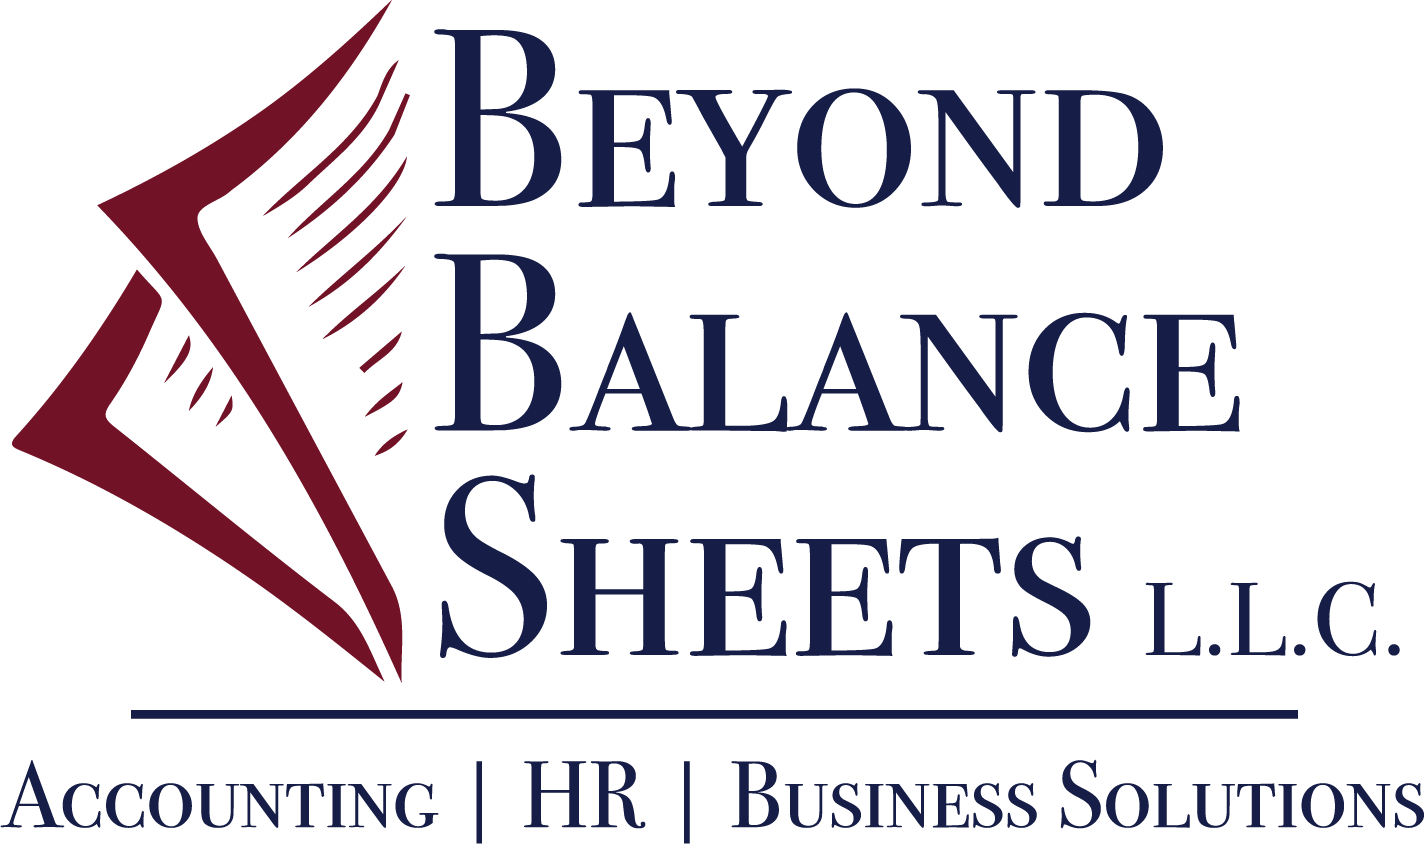 Beyond Balance Sheets